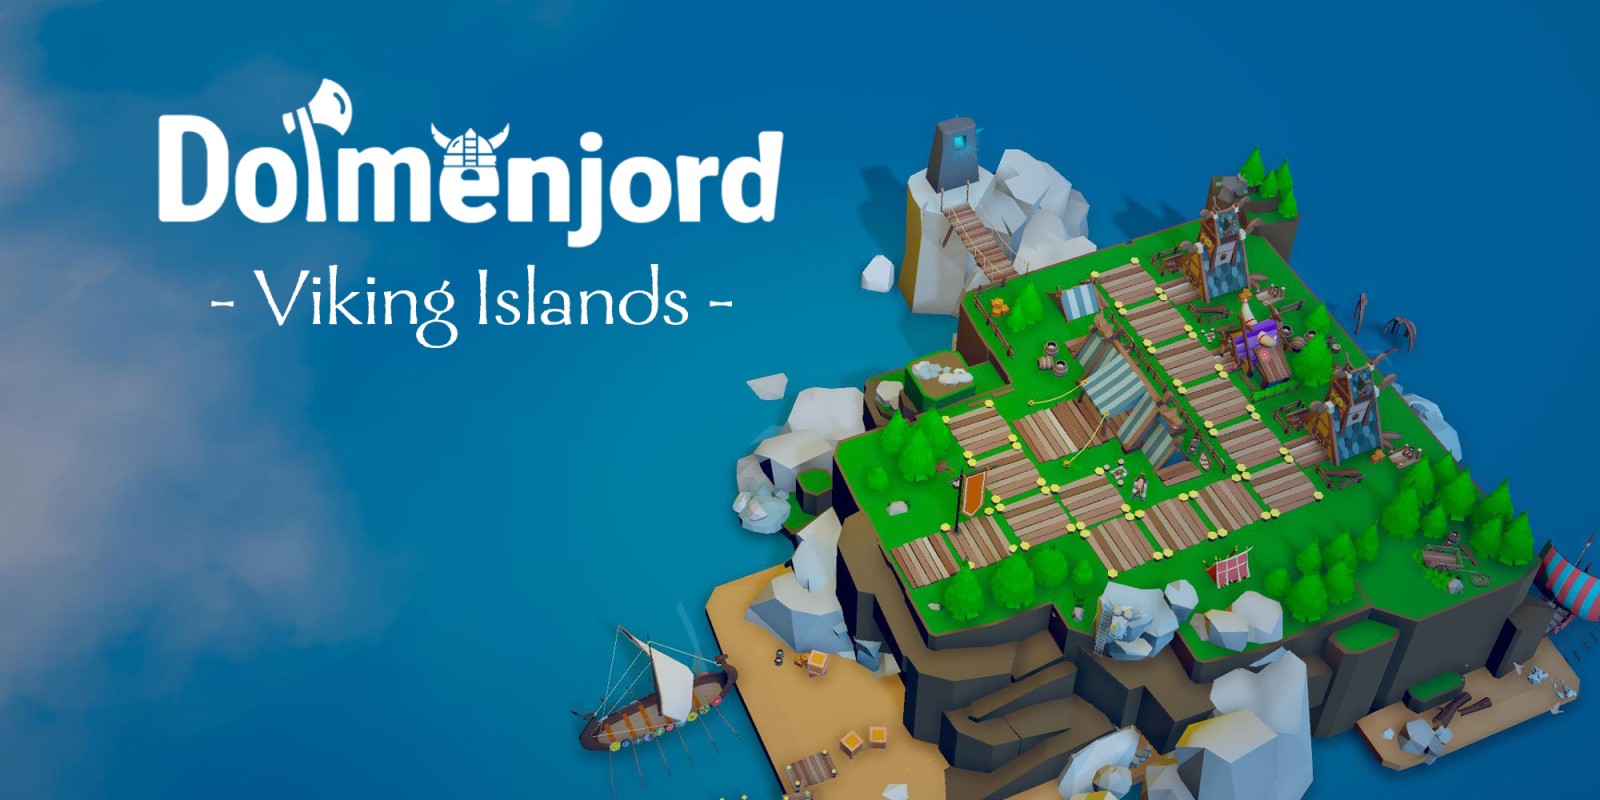 Dolmenjord - Viking Islands